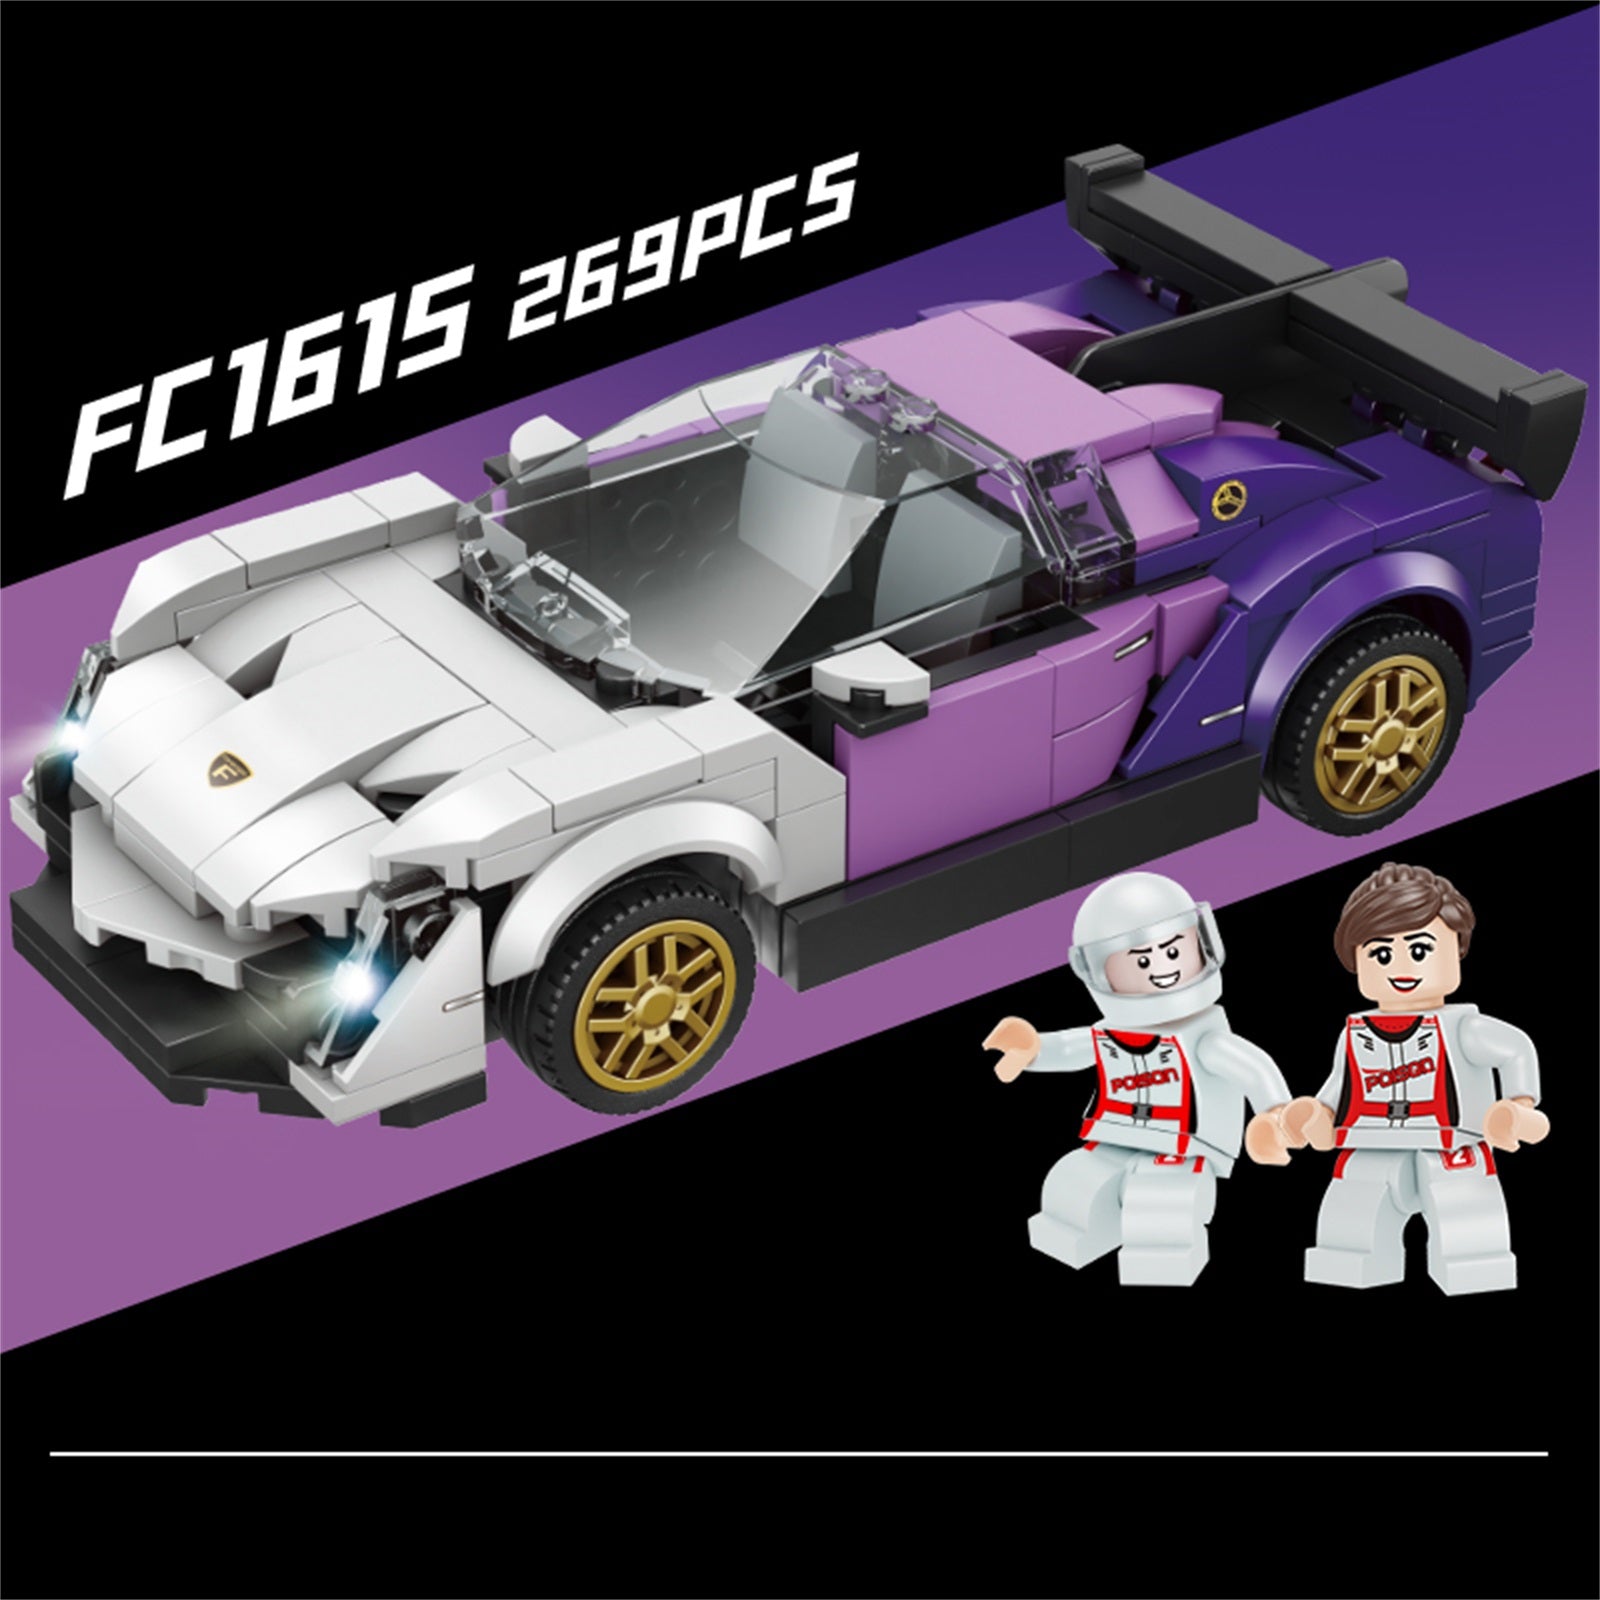 Forange Technician FC1615 Speed Champions Purple Racer Car